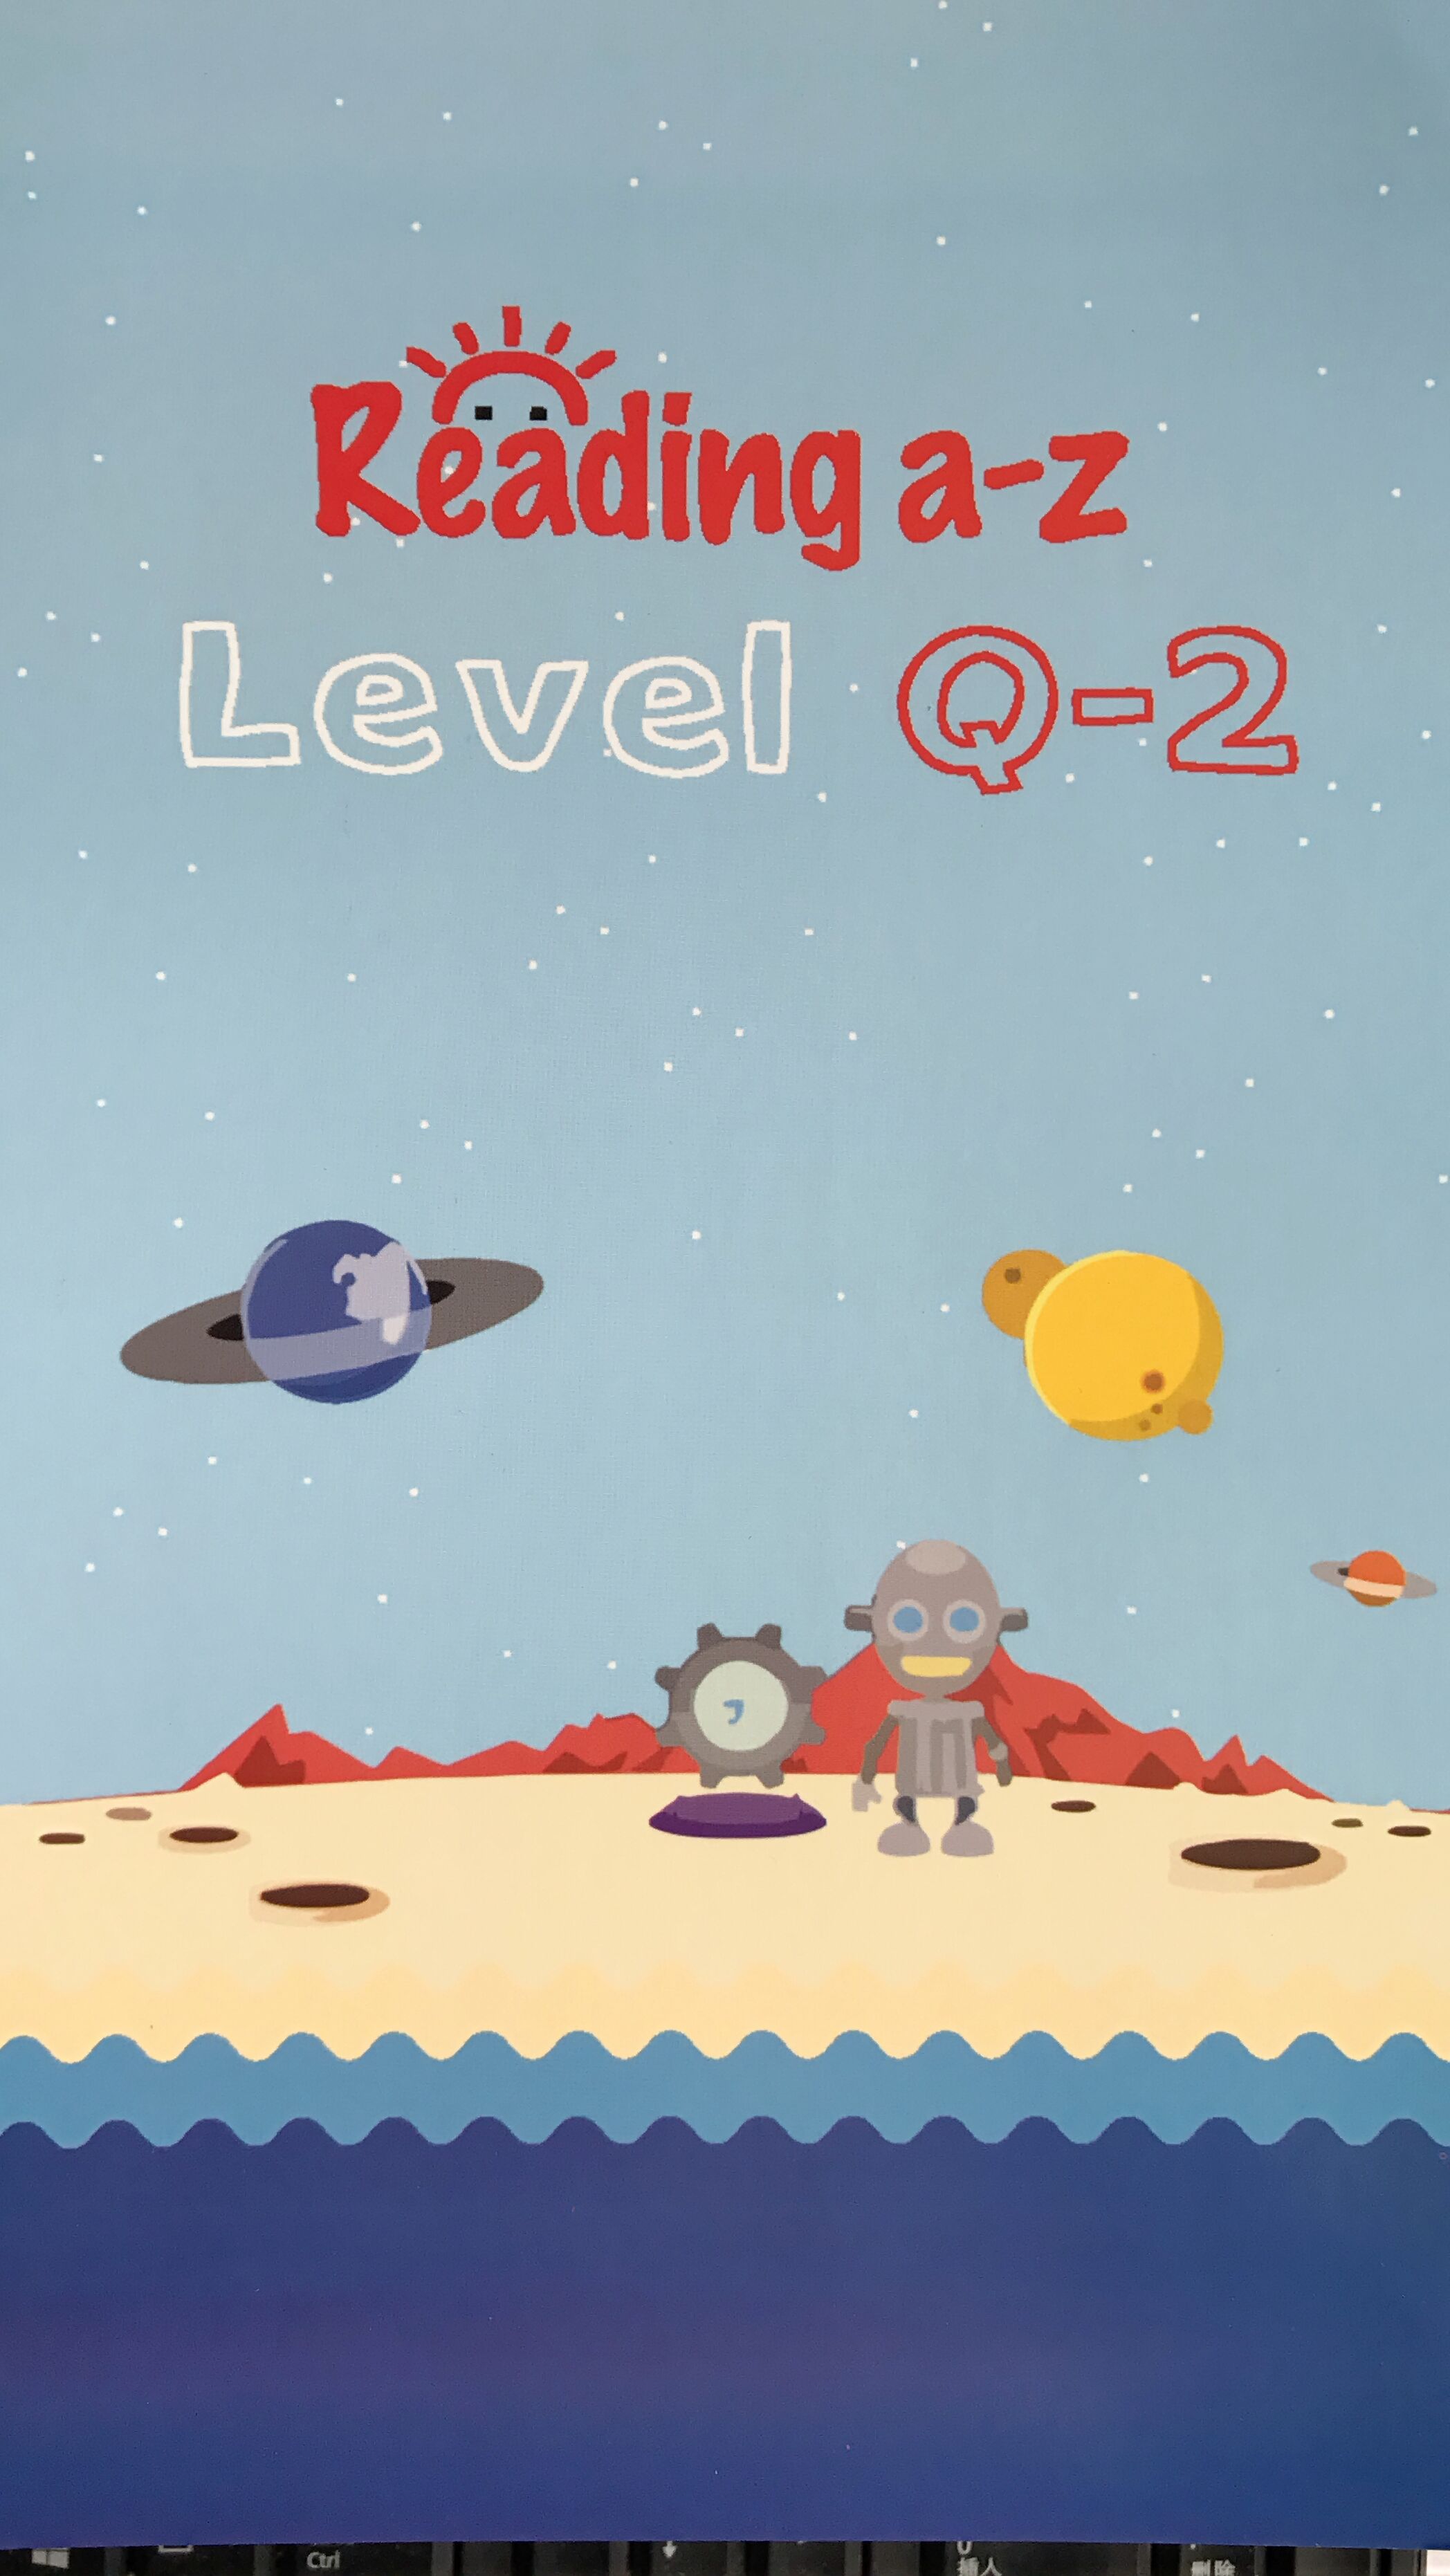 Reading A-Z Level Q-2